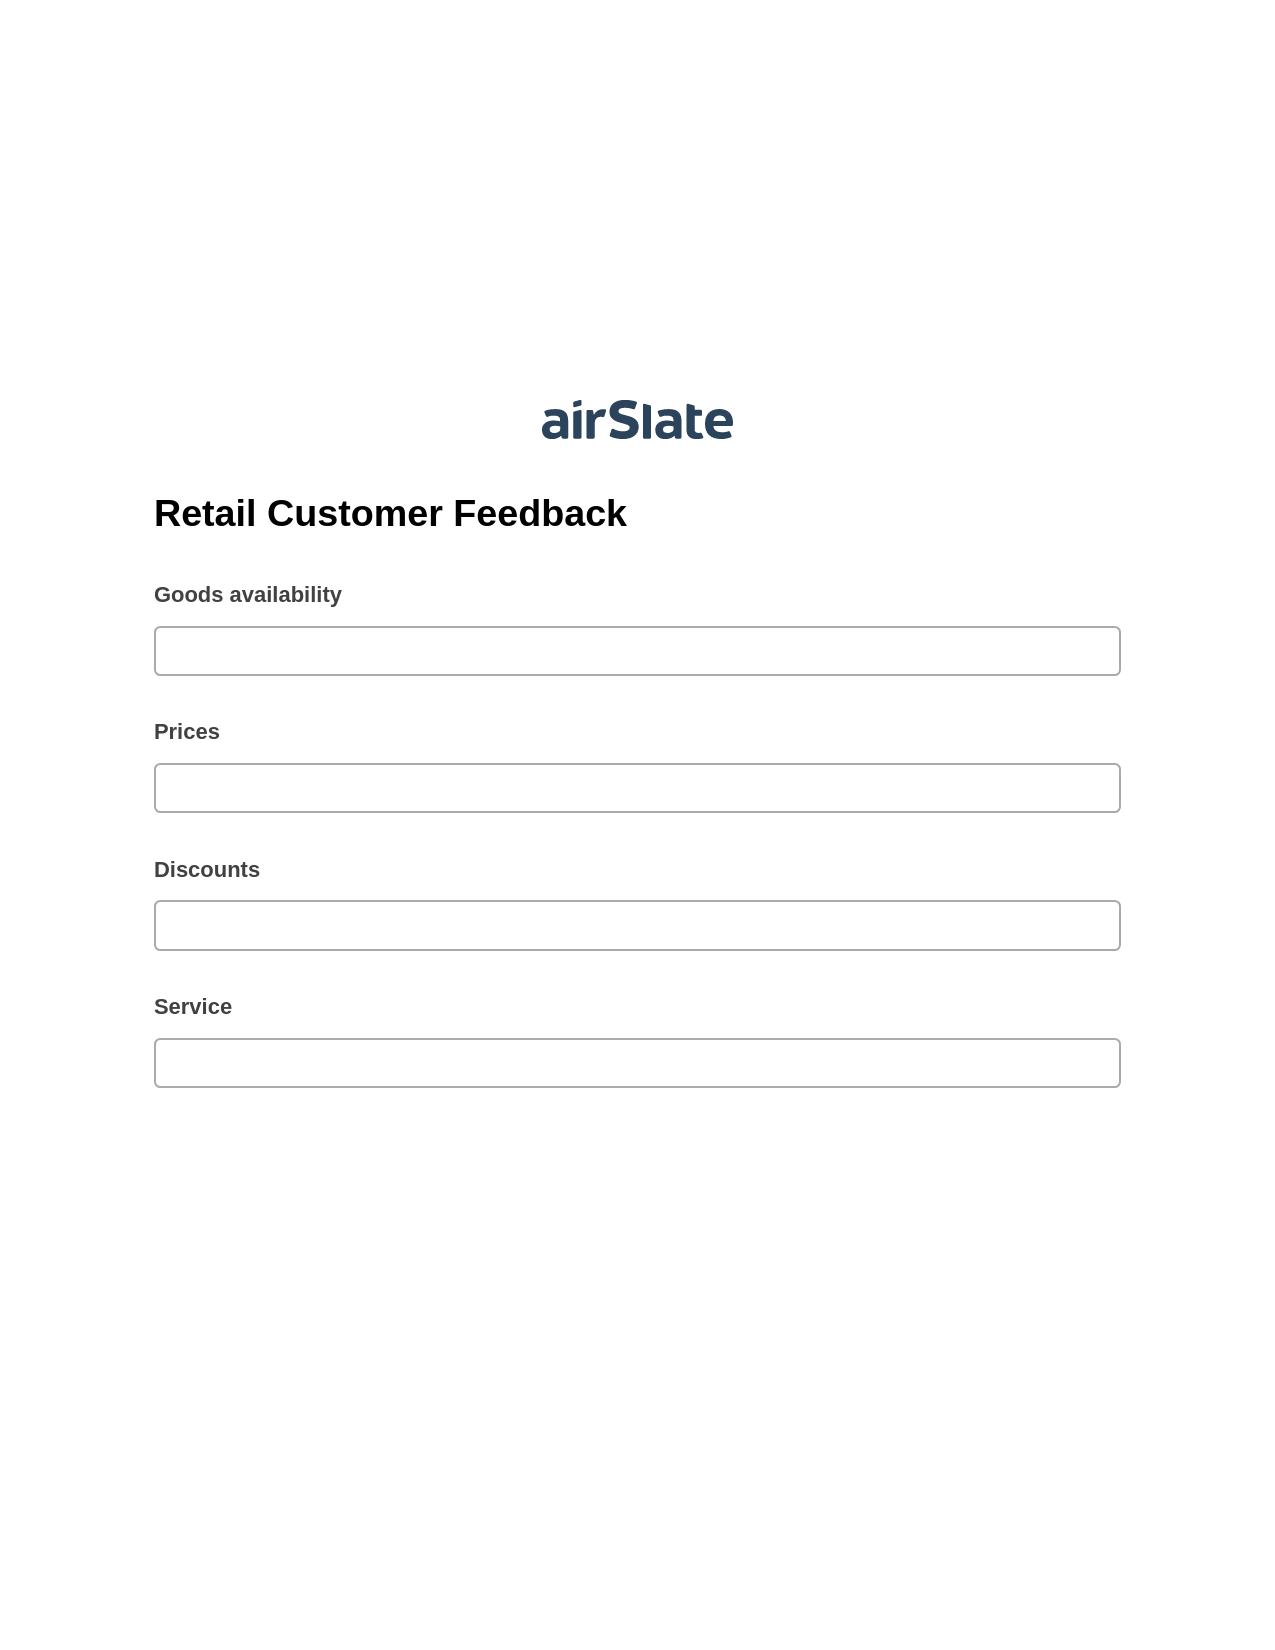 Retail Customer Feedback Pre-fill from Google Sheets Bot, Create NetSuite Records Bot, Slack Notification Postfinish Bot